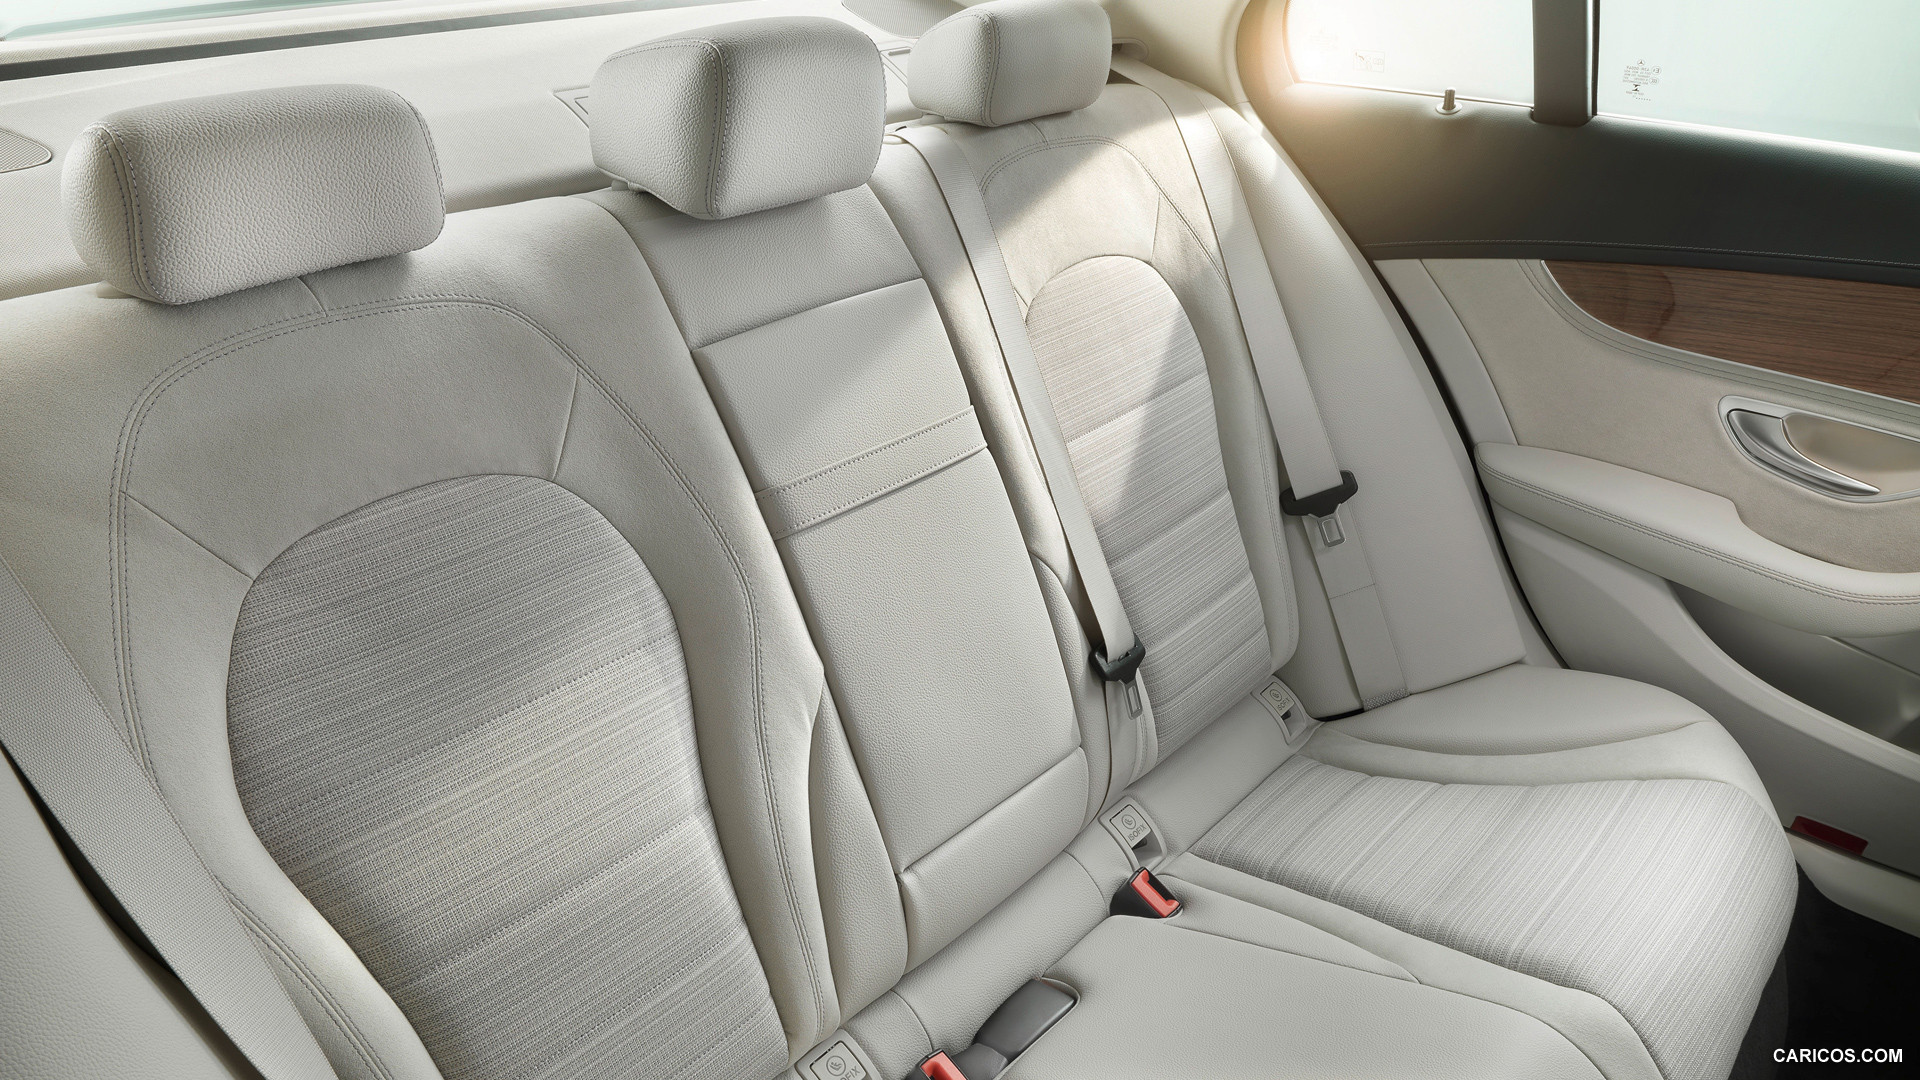 2015 Mercedes-Benz C-Class C 300 BlueTEC HYBRID Exclusive Line - Interior Rear Seats, #43 of 181